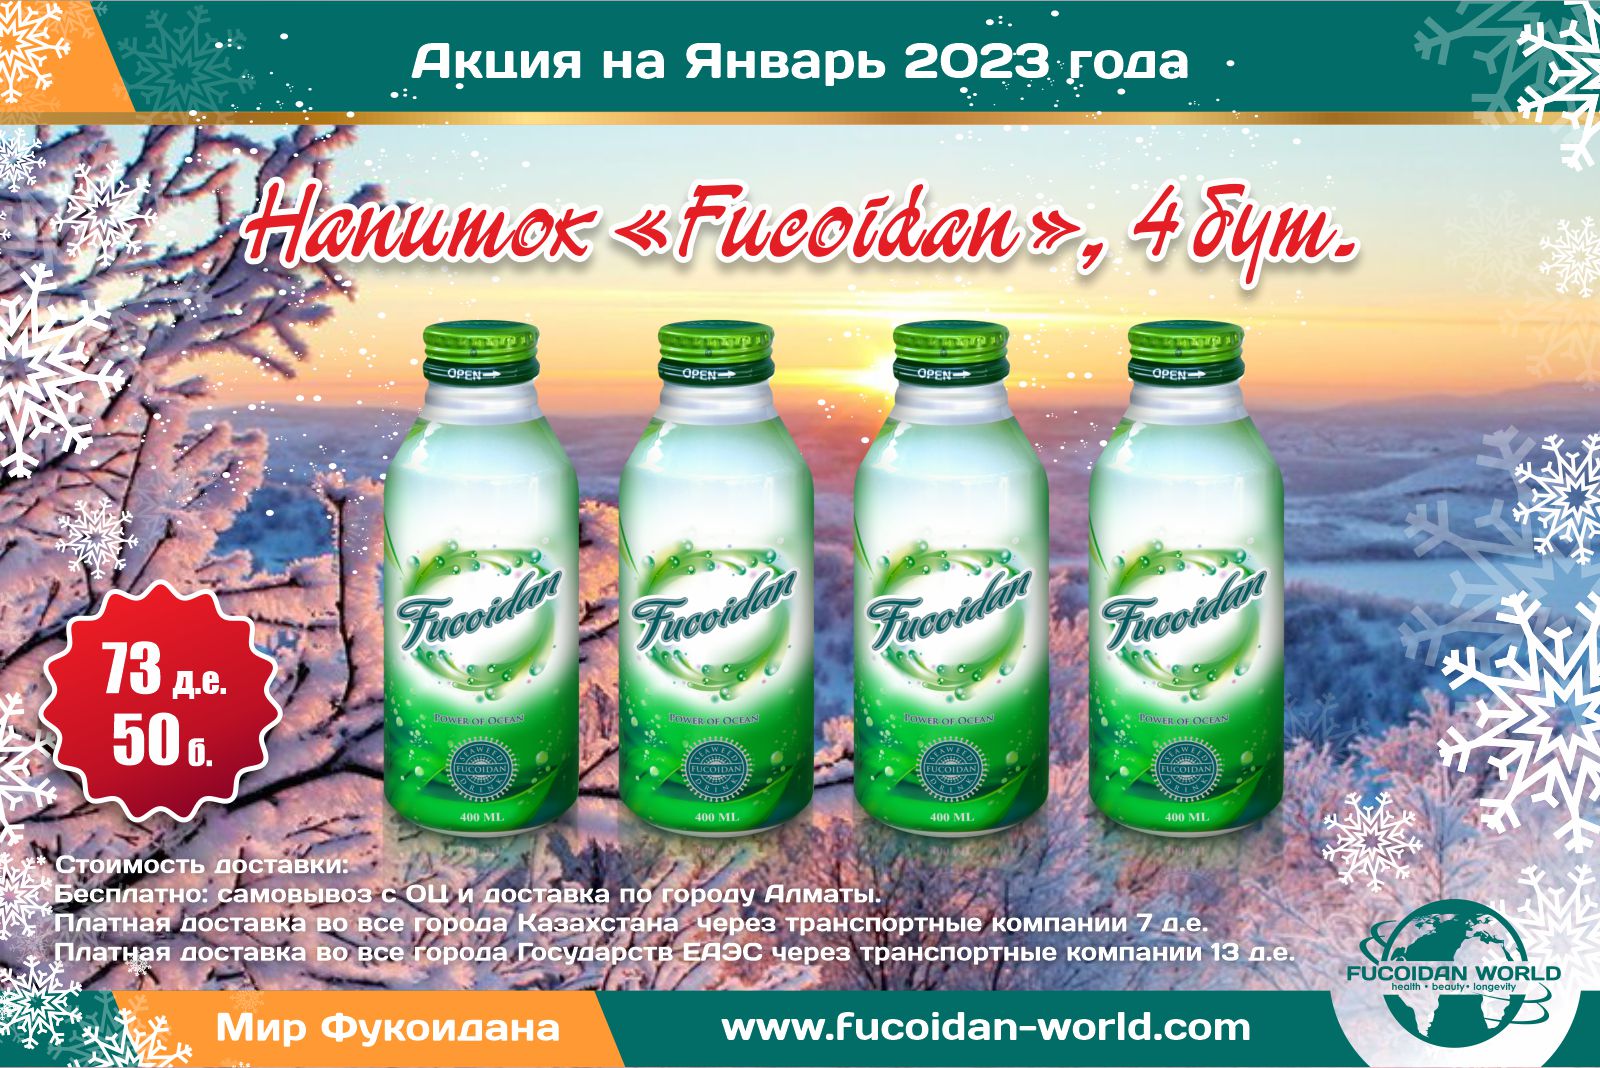 4 бутылочки напитка «Fucoidan»